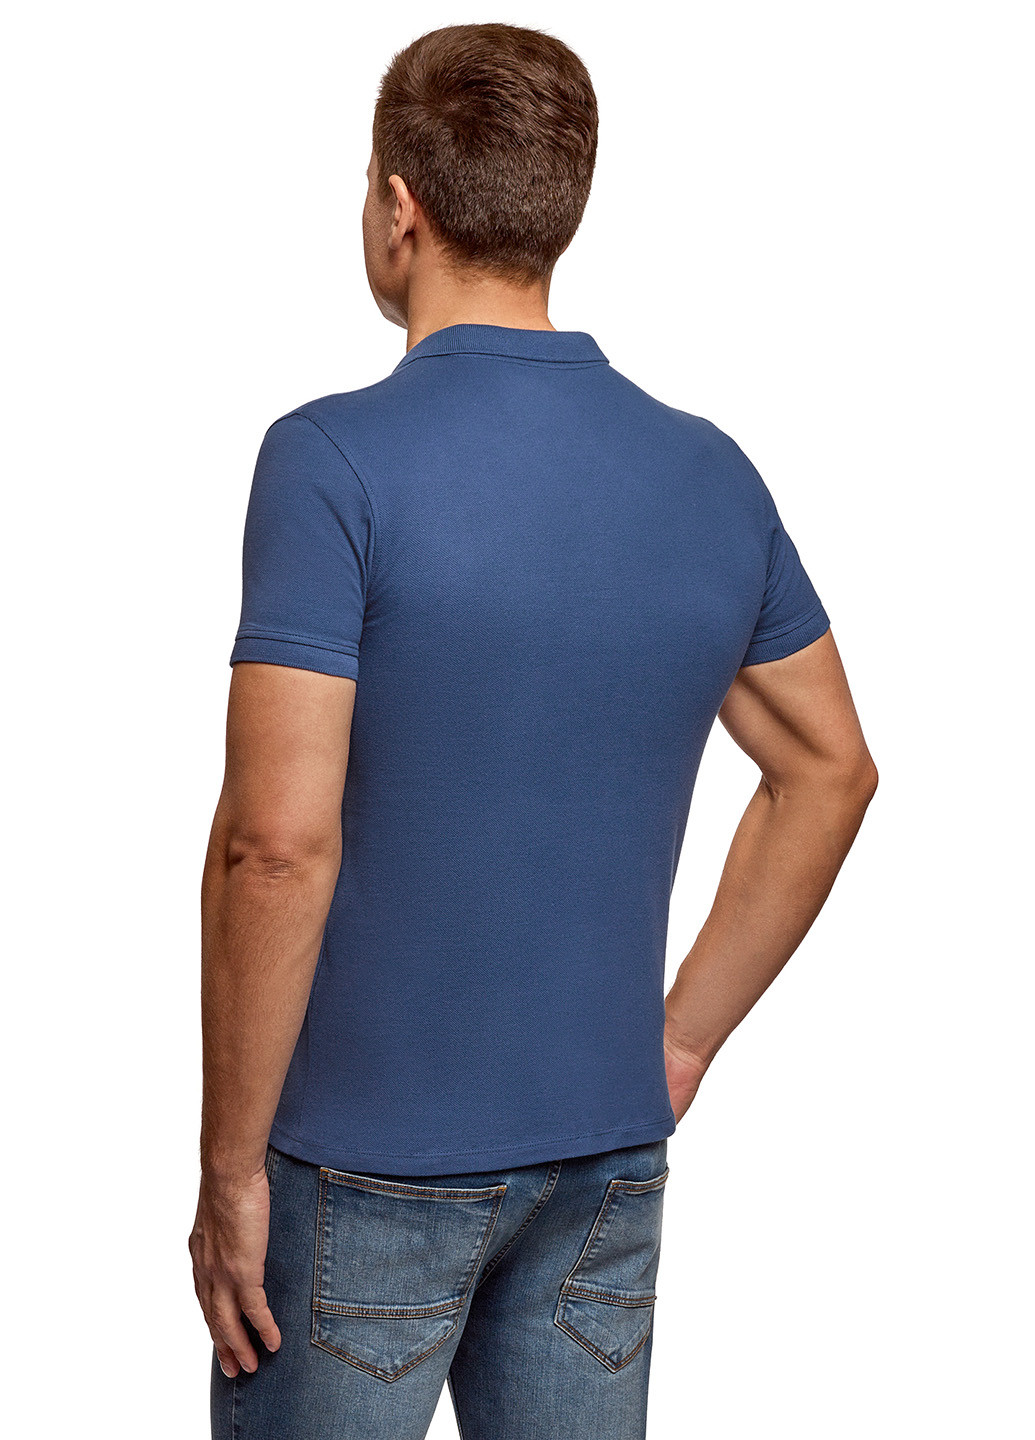 Темно-синяя футболка-поло для мужчин Oodji с логотипом